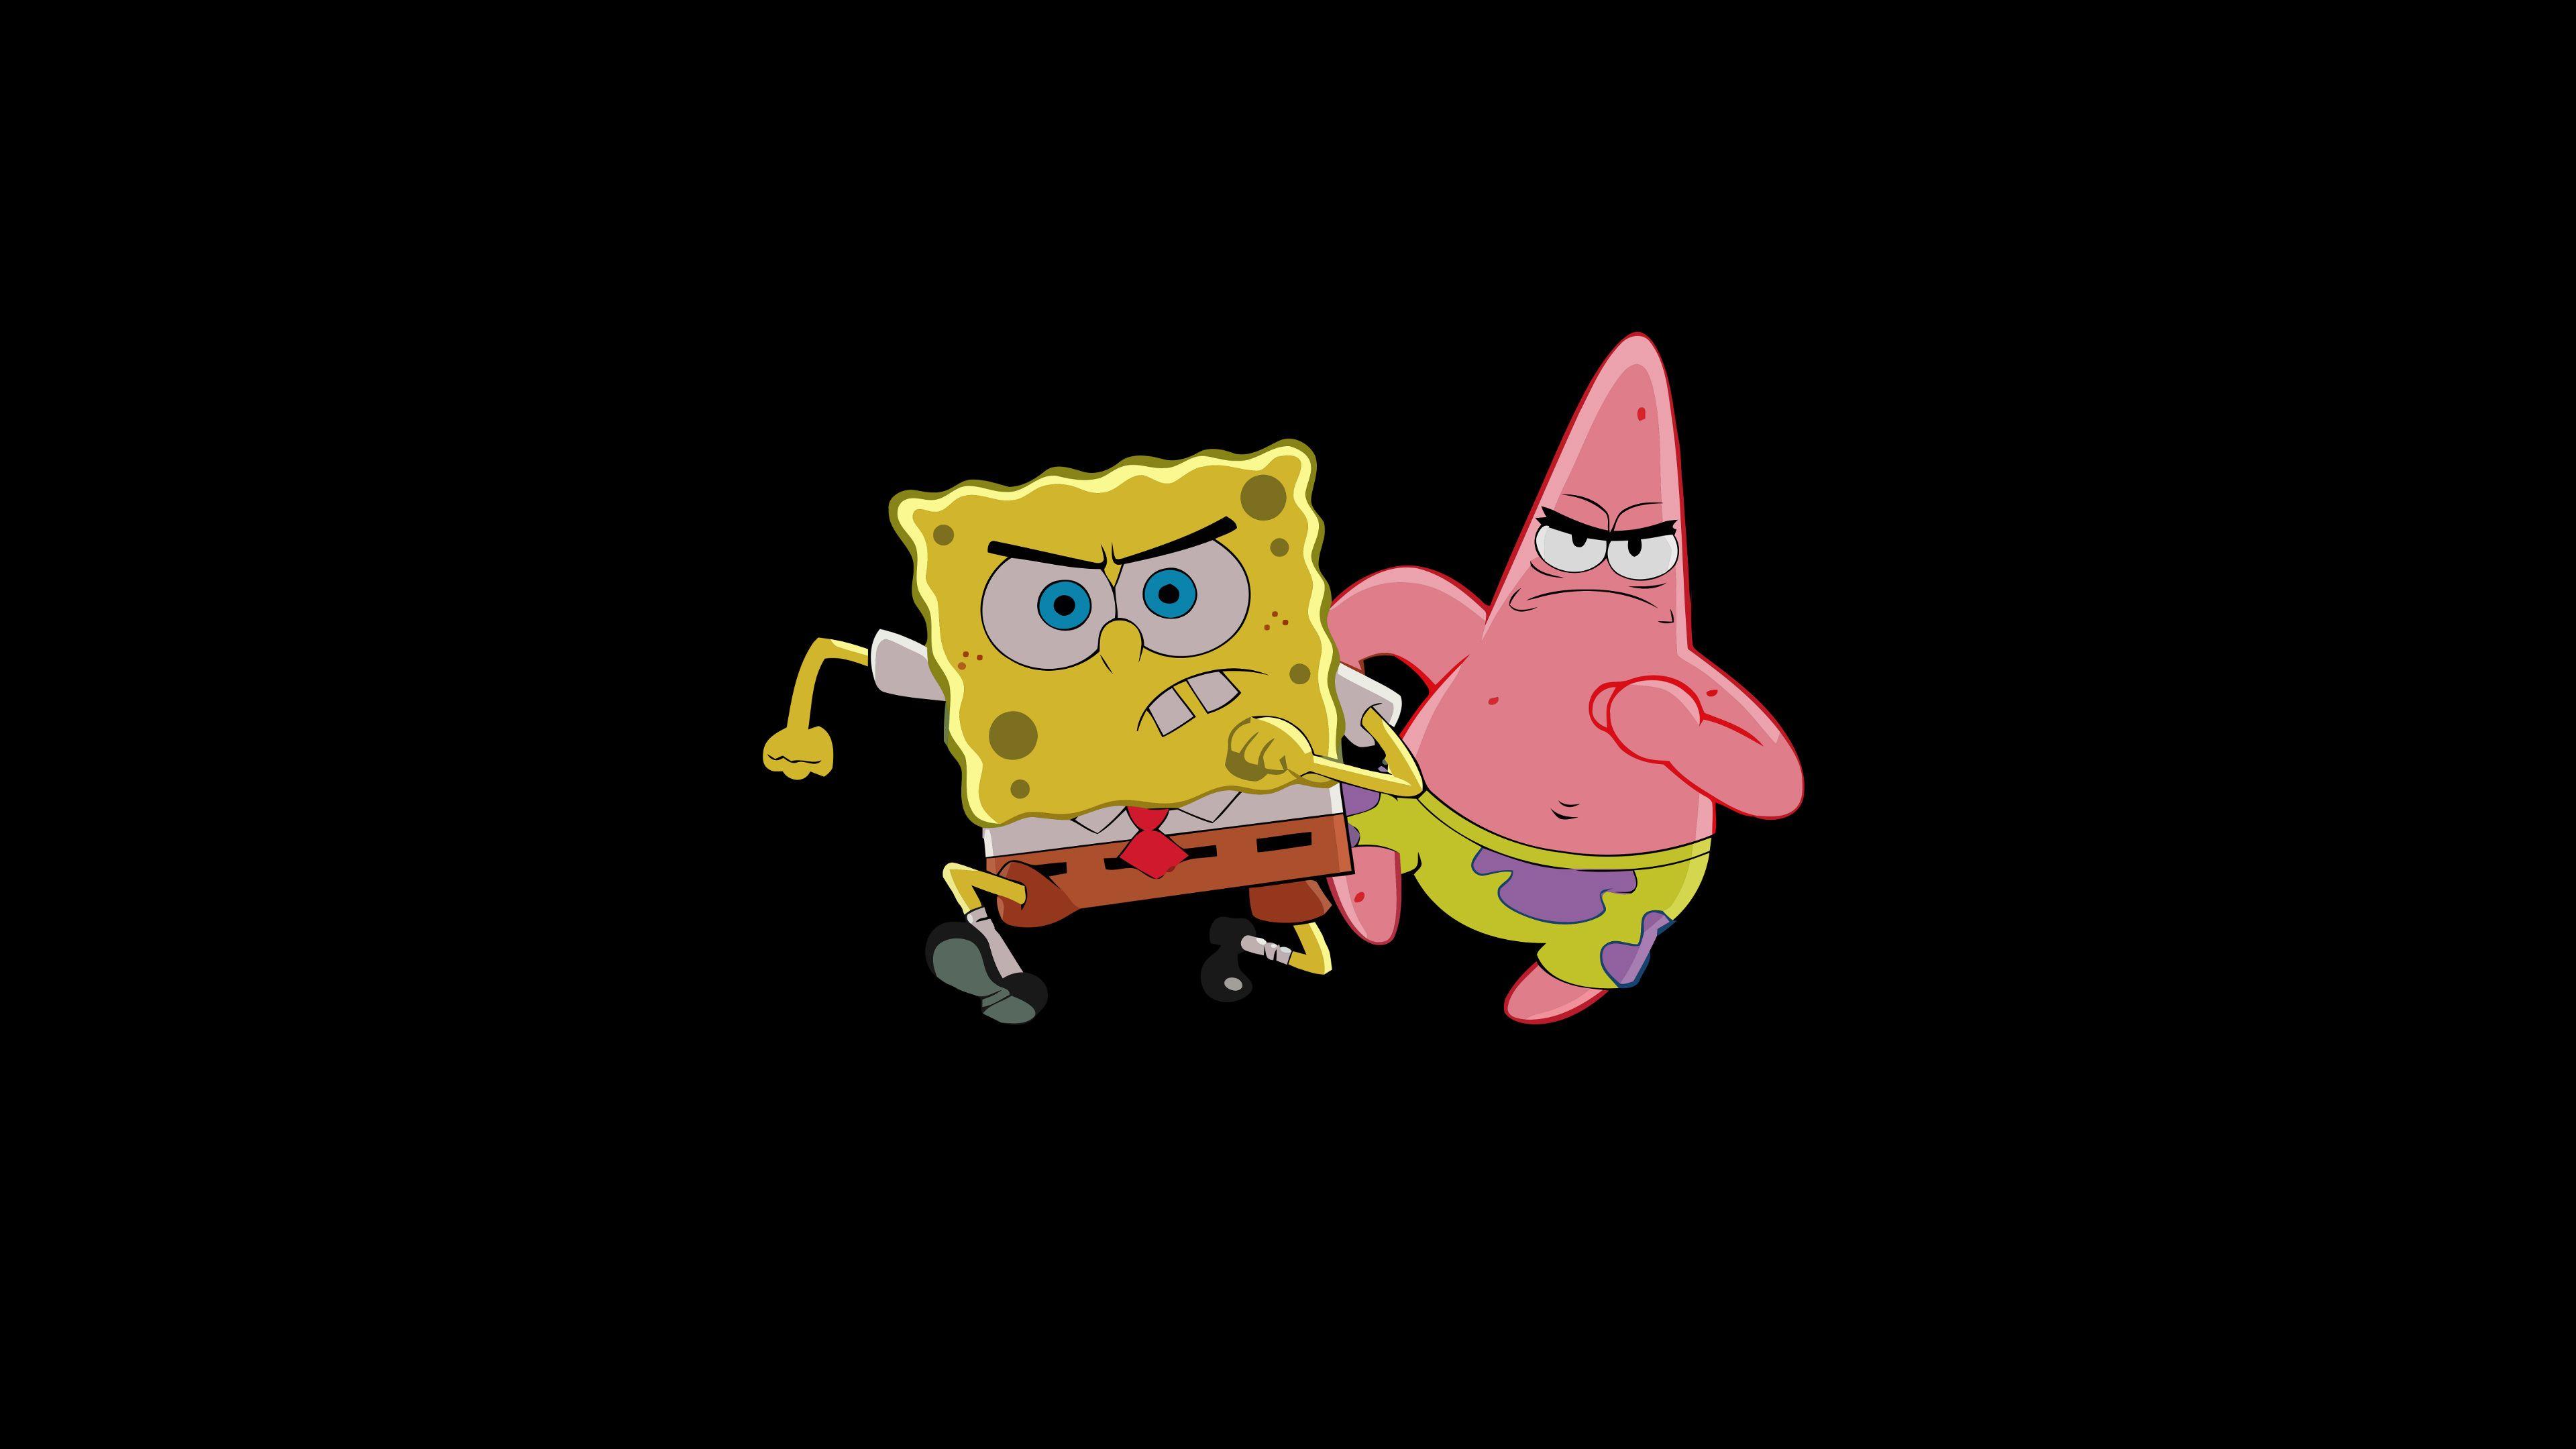 Patrick Star And Spongebob, HD Cartoons, 4k Wallpaper, Image